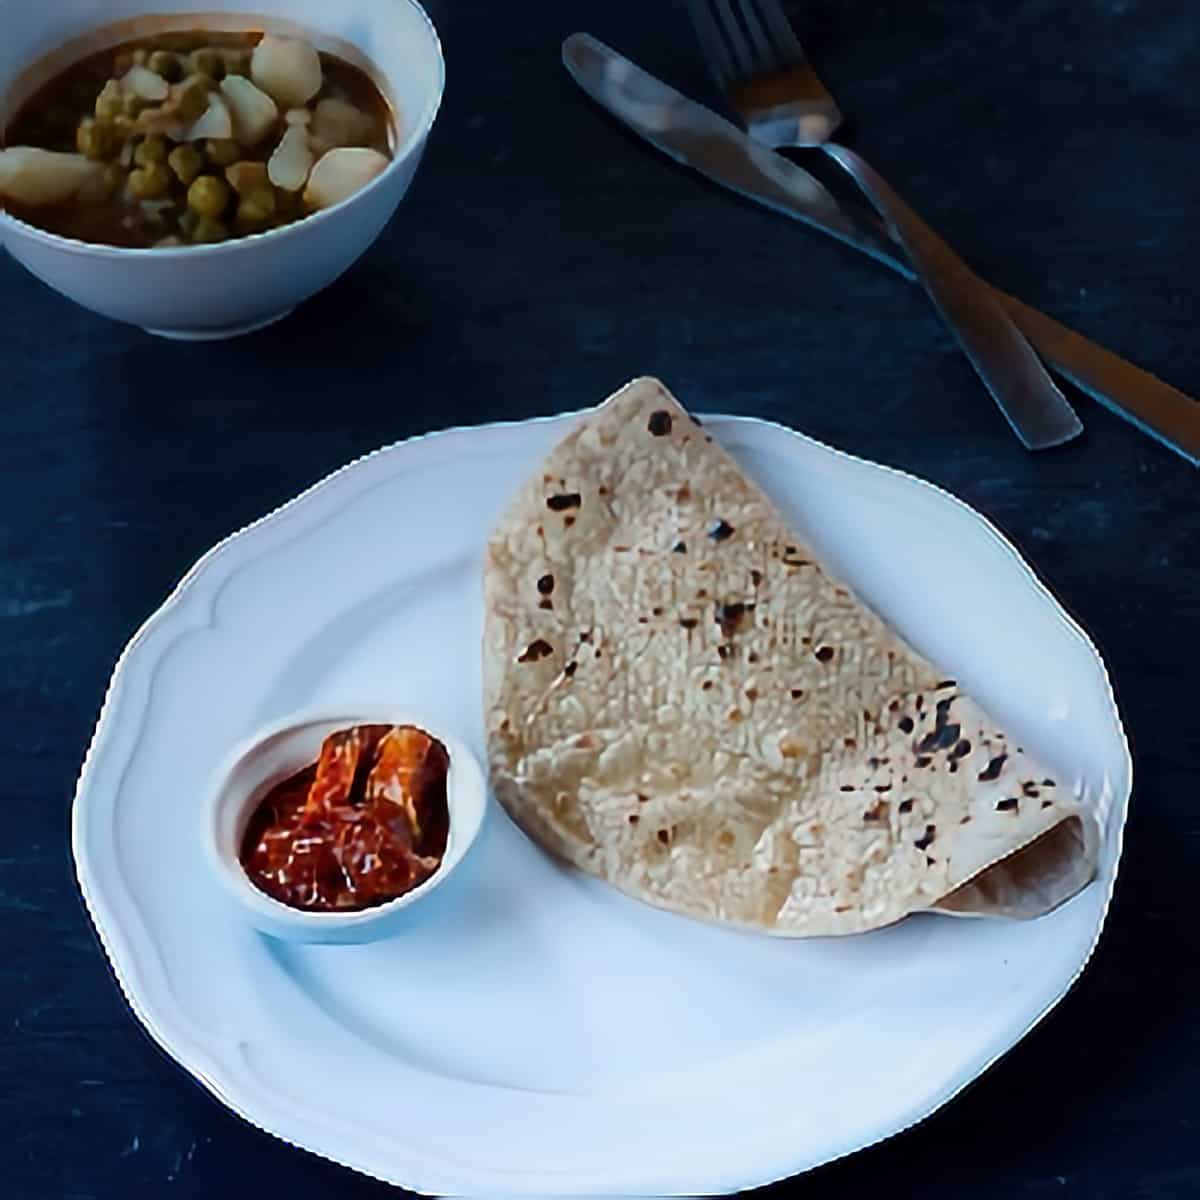 23. Chapati (Indian Flat Bread)